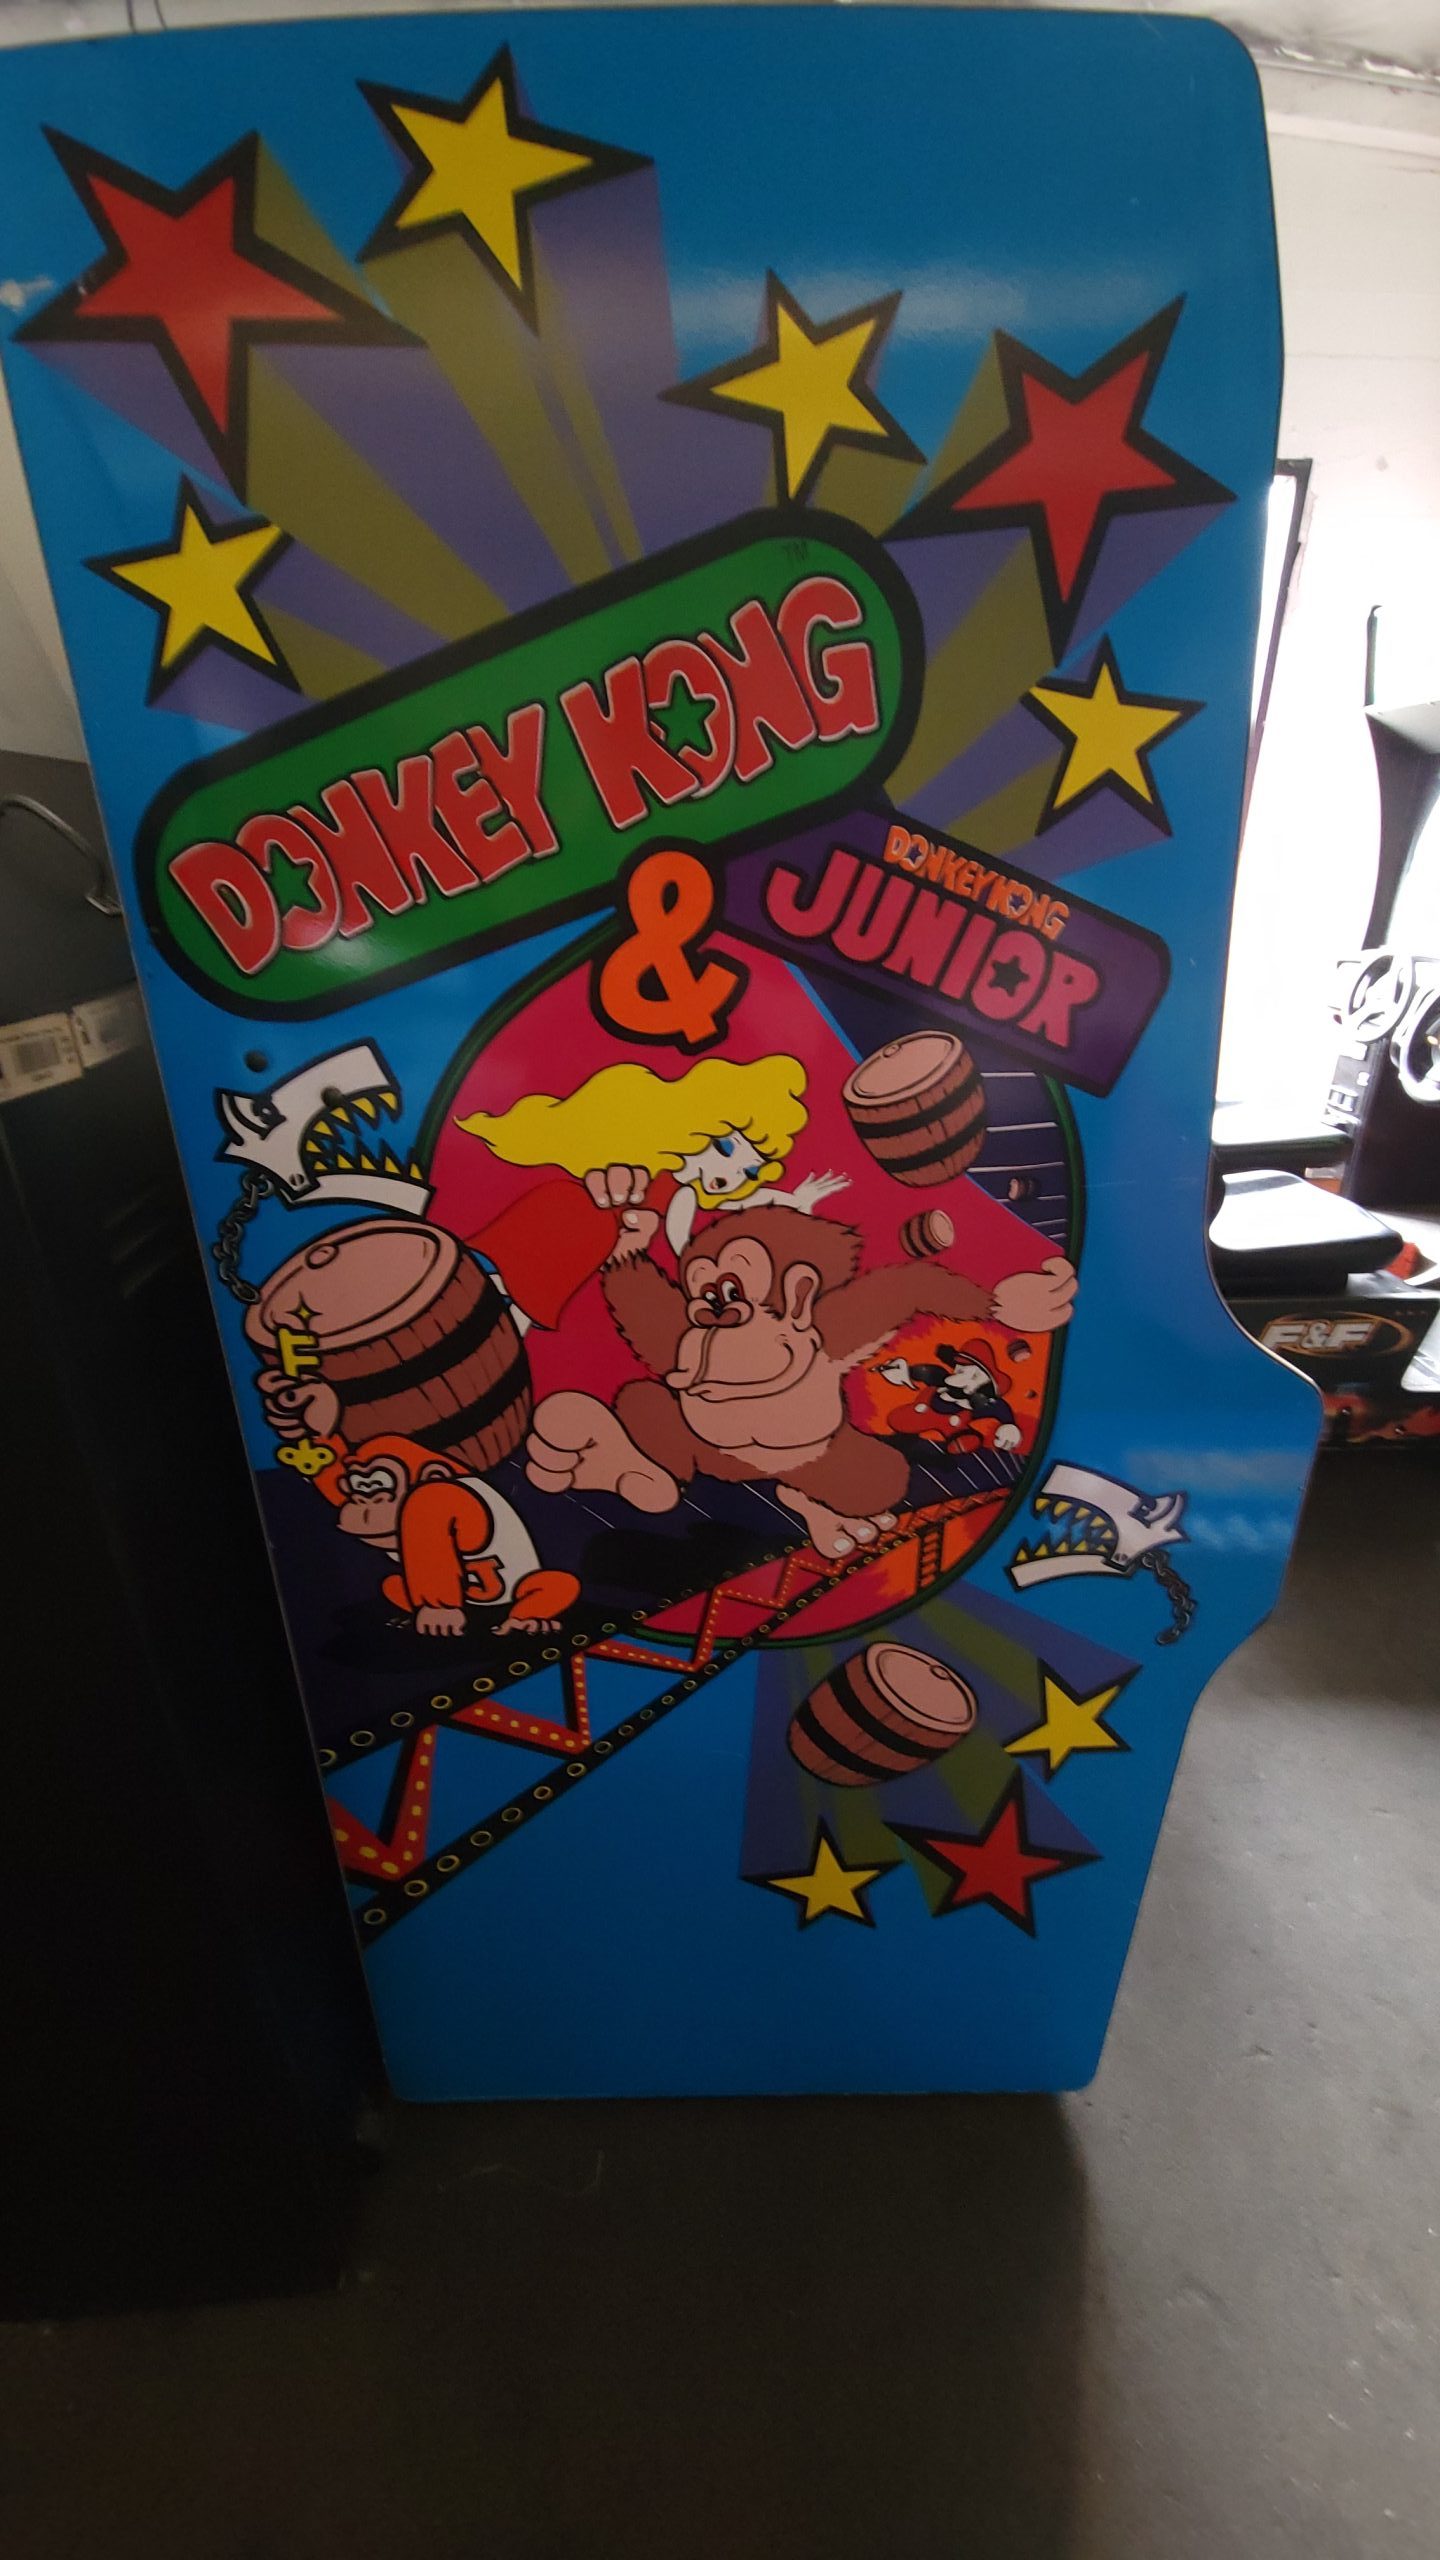 Rent Donkey Kong Multi Game with Donkey Kong Jr. and Mario Bros